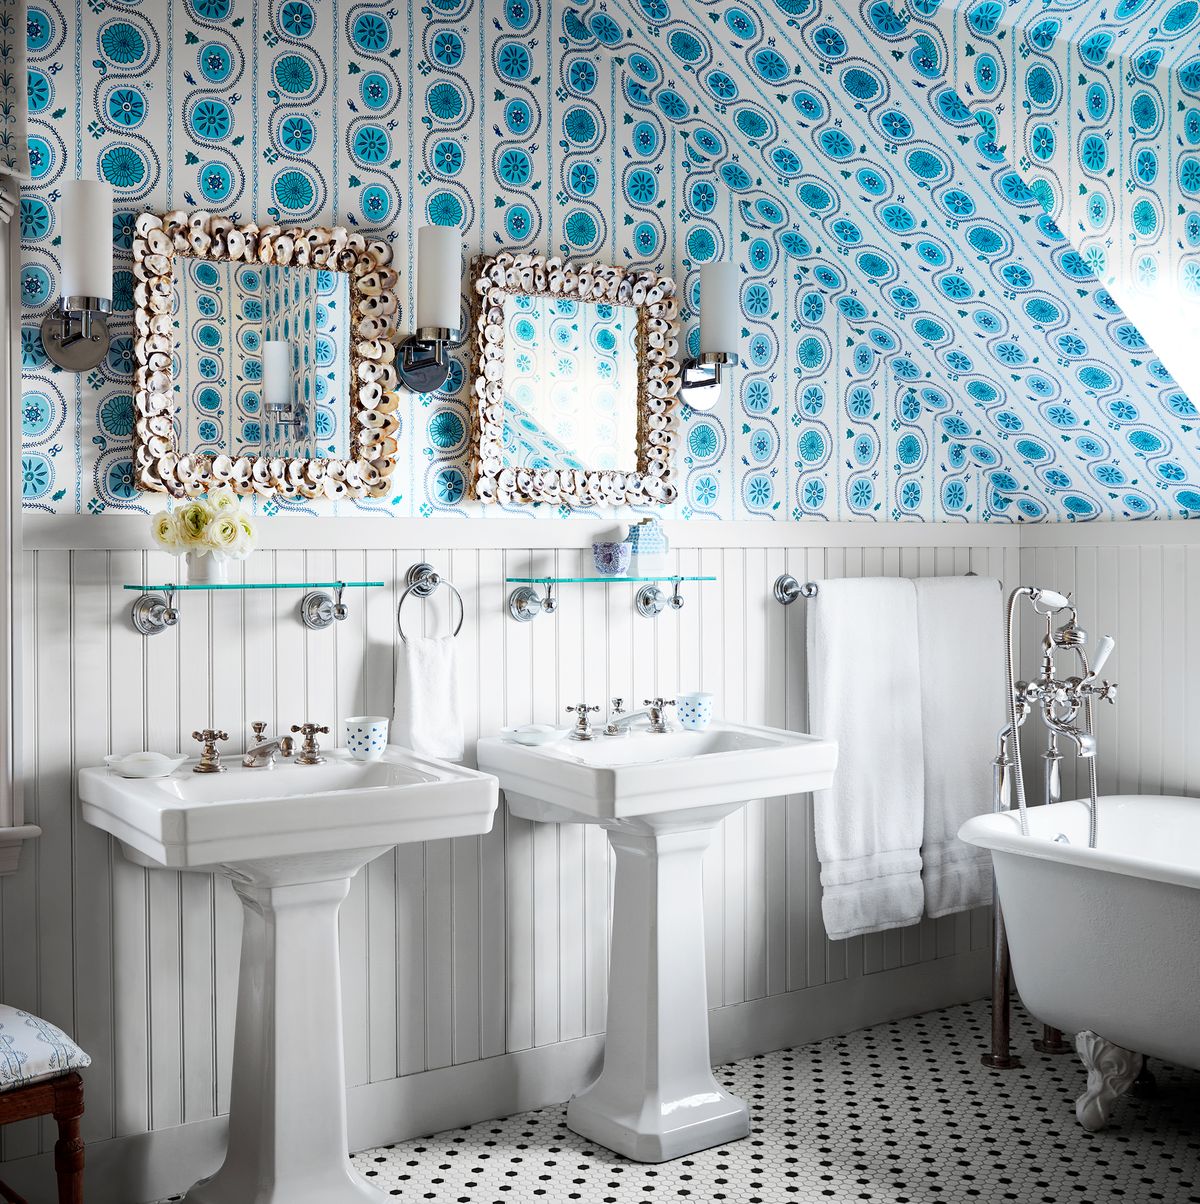 16 Of The Best Bathroom Lighting Ideas